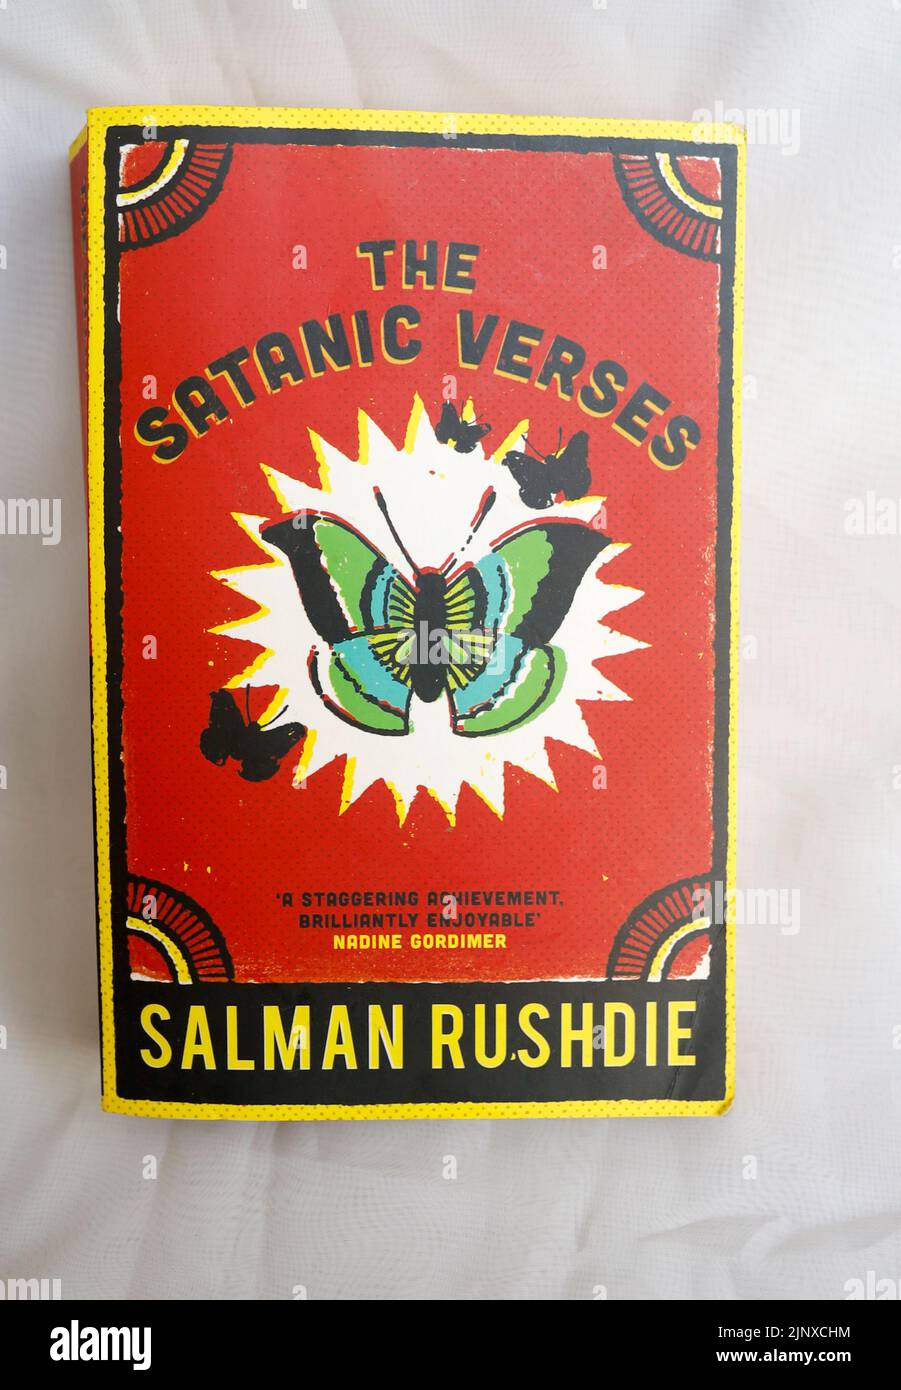 Salaman Rushdie's The Satanic Verses, front cover paperback book Stock Photo